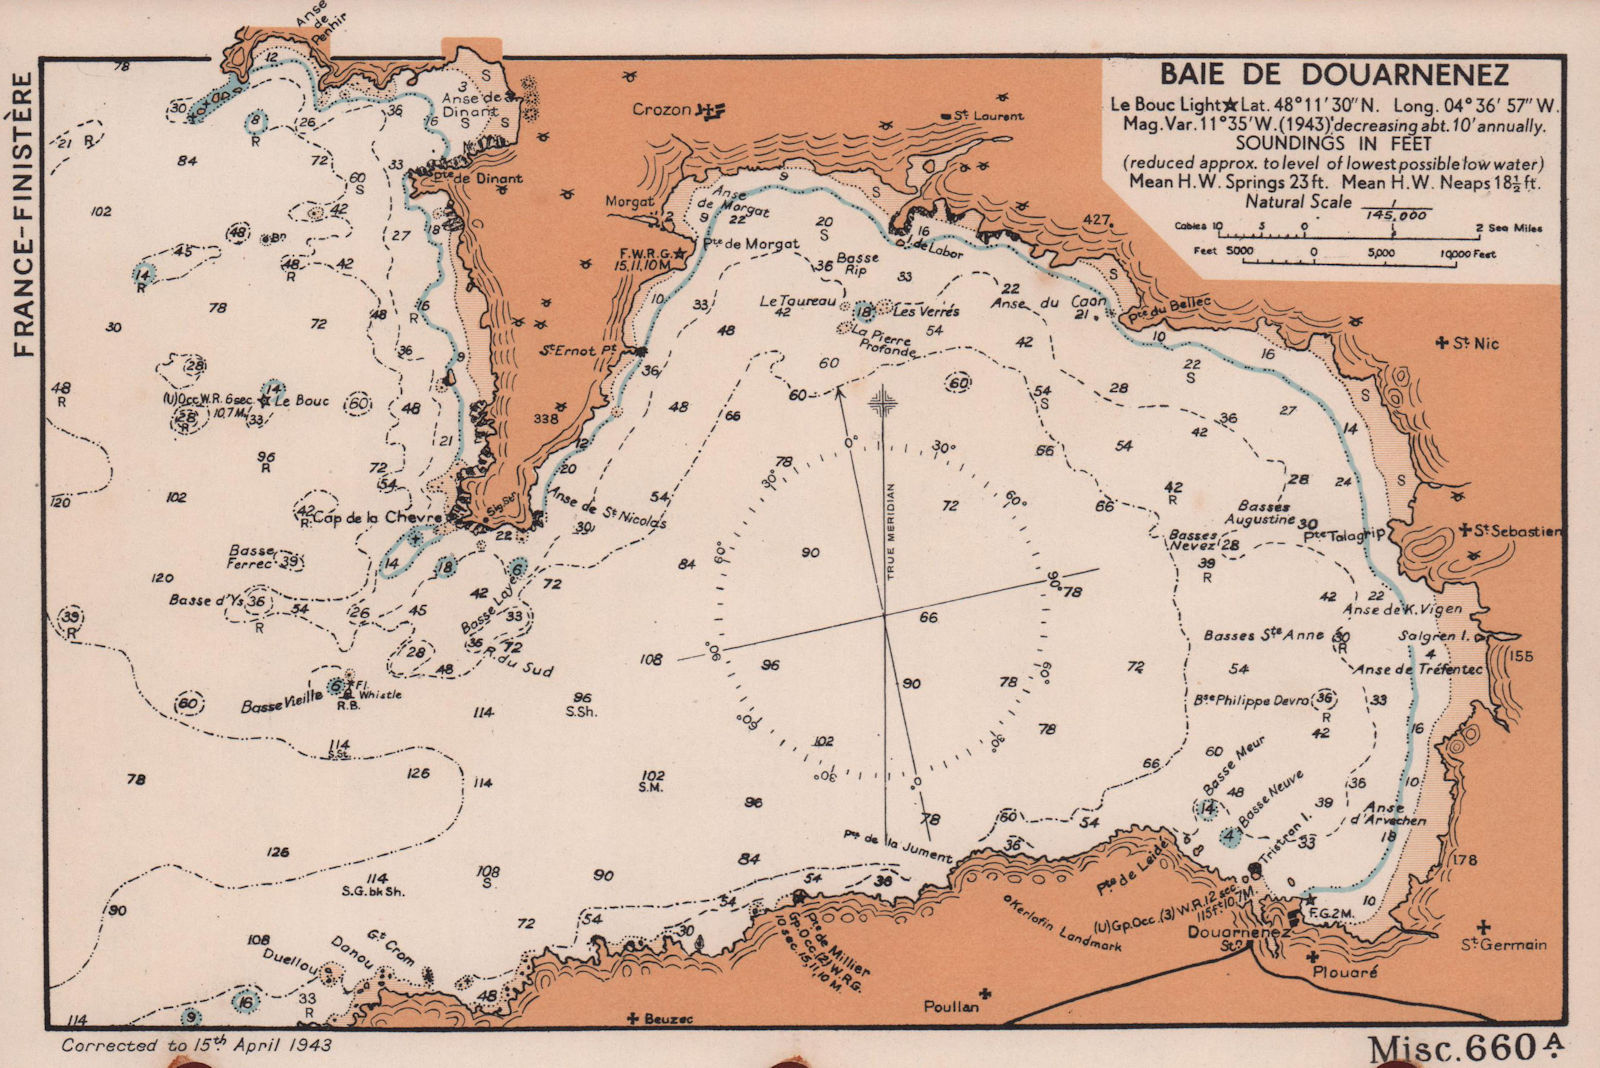 Baie de Douarnenez sea coast chart. D-Day planning map. Finistère ADMIRALTY 1943